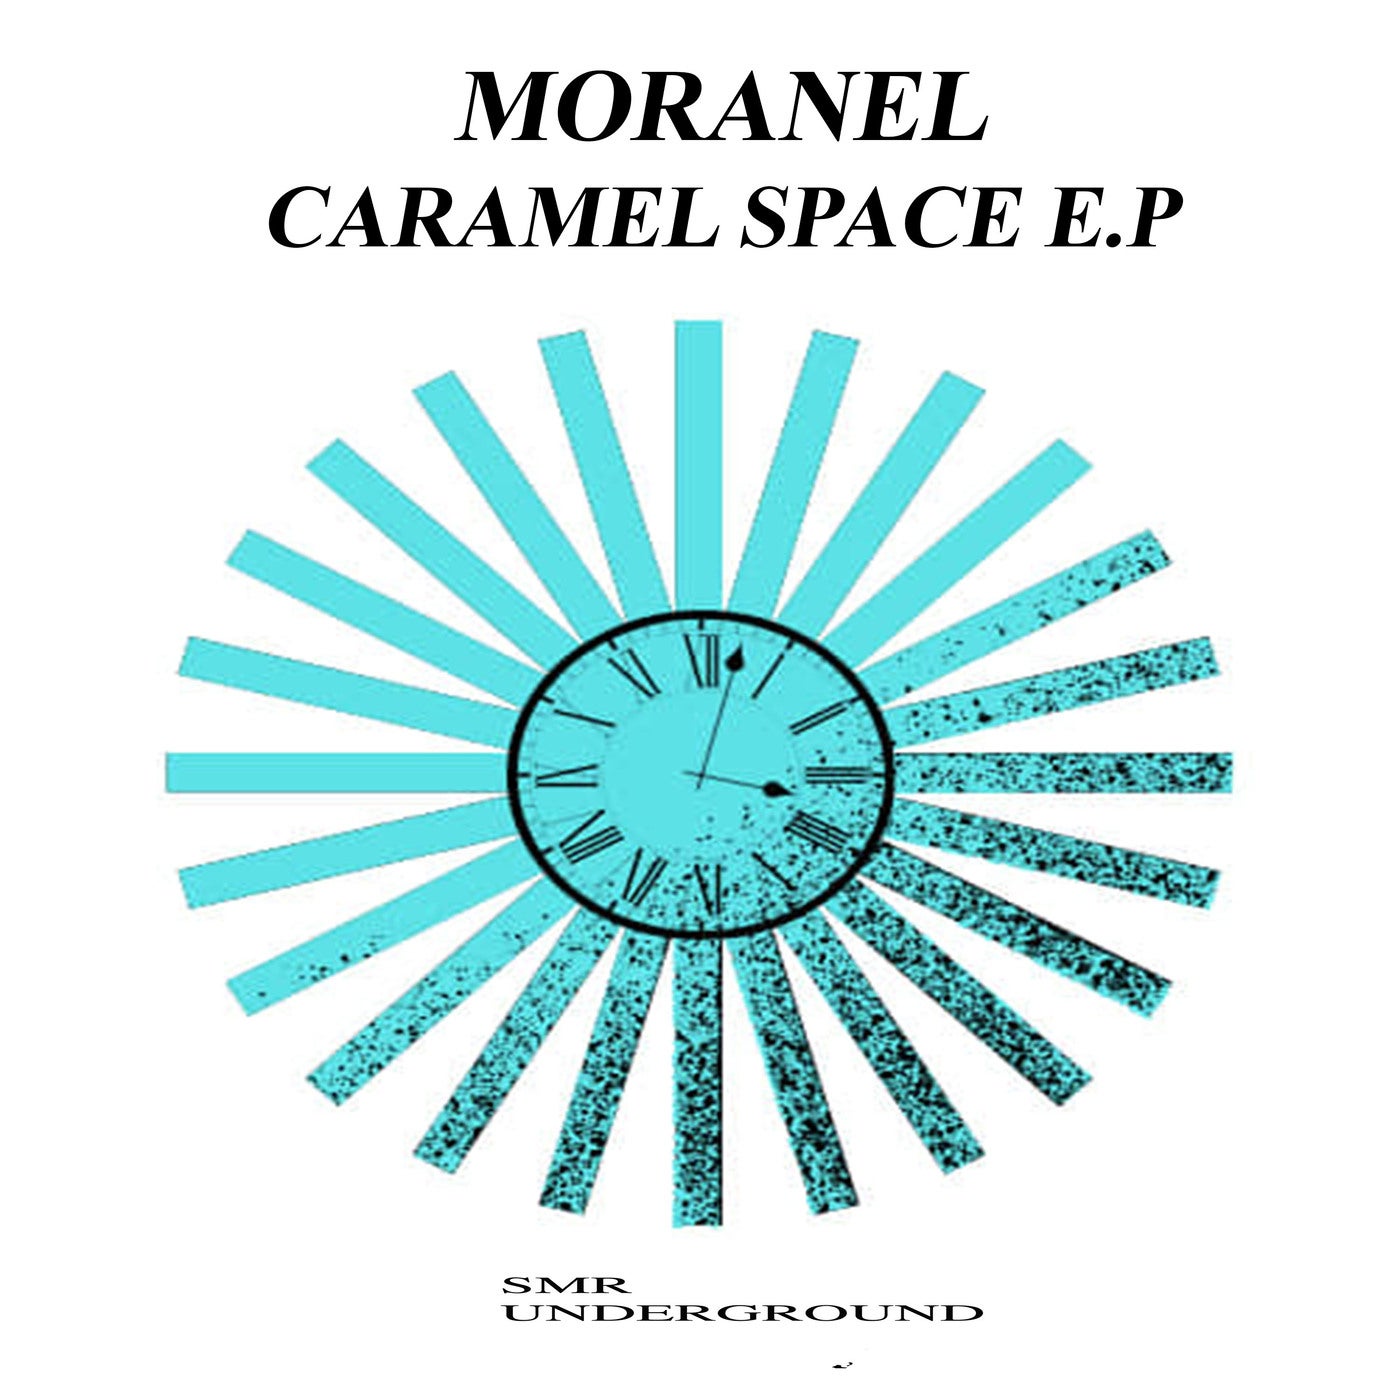 Caramel Space E.p